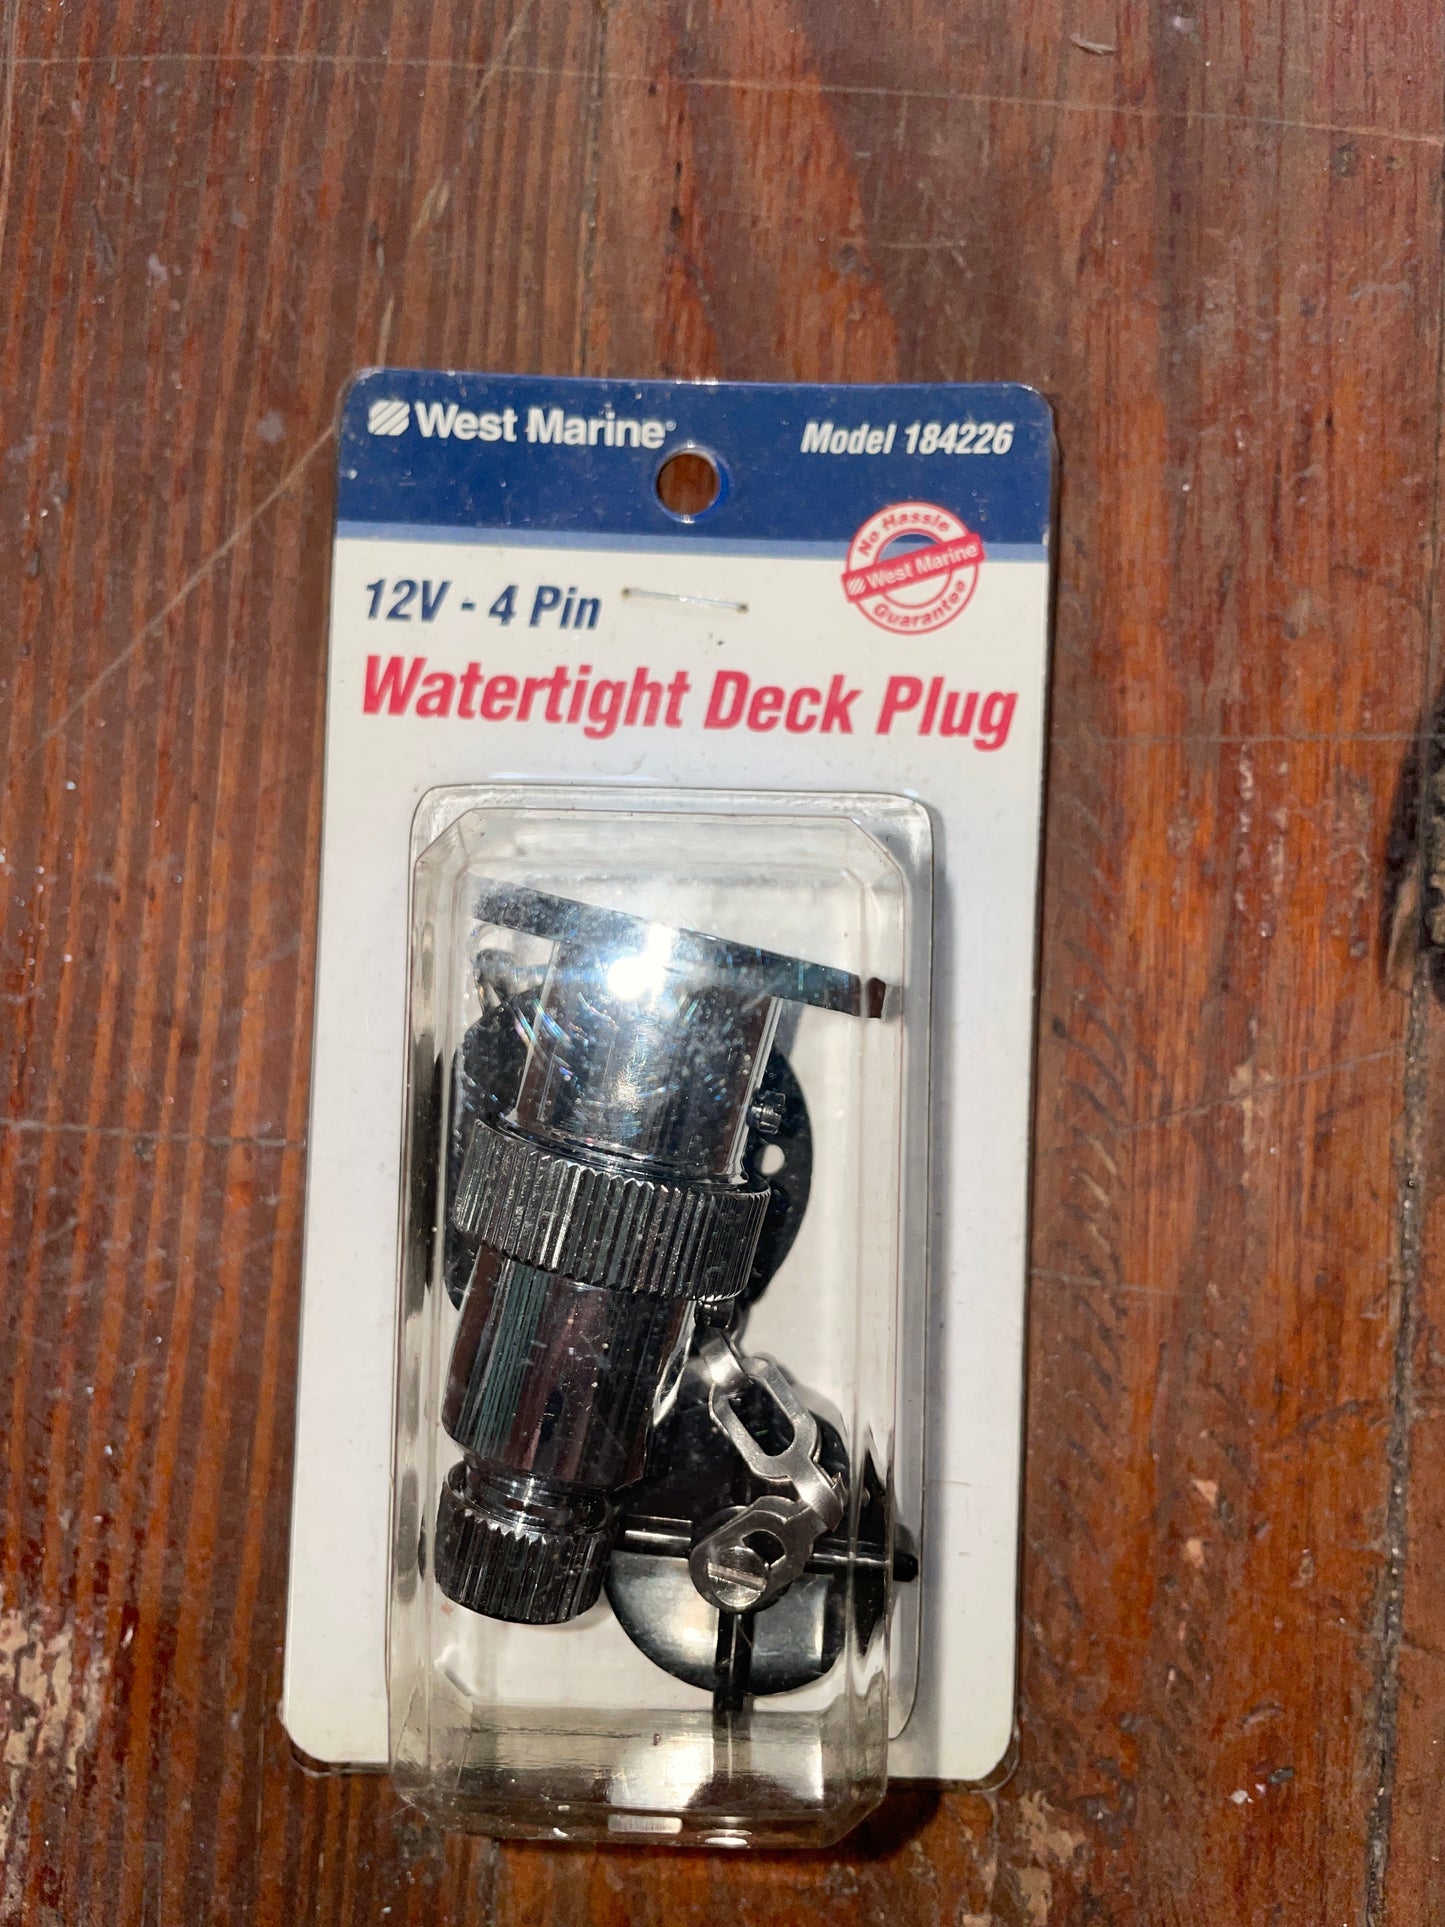 West Marine Watertight Deck Plug 12V-4 Pin- NEW